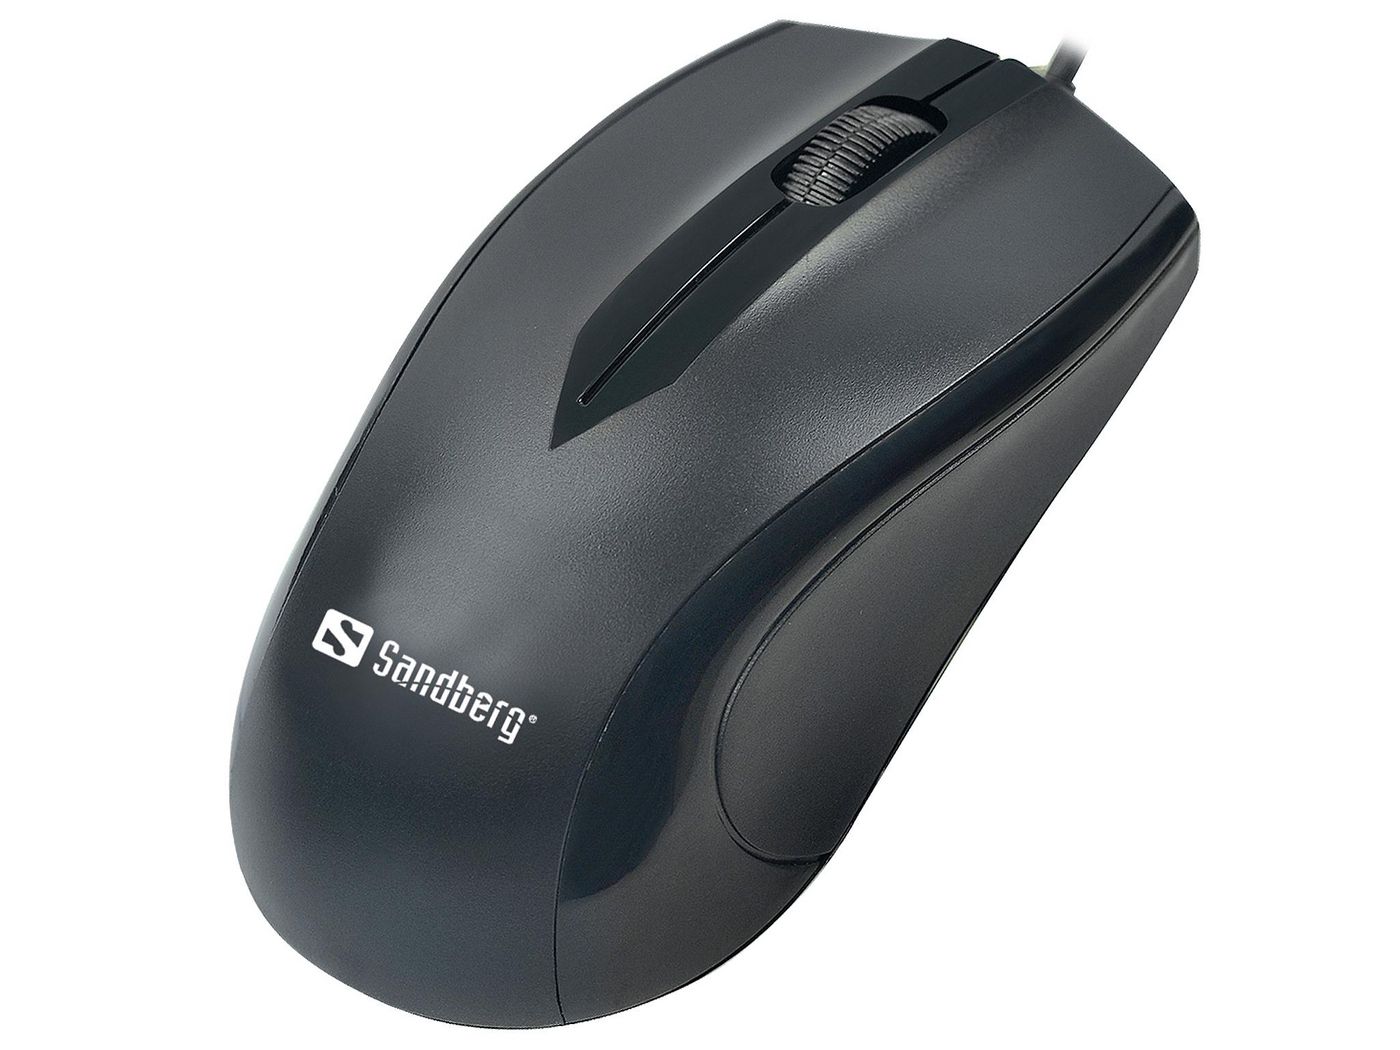 Sandberg 631-01 USB Mouse 